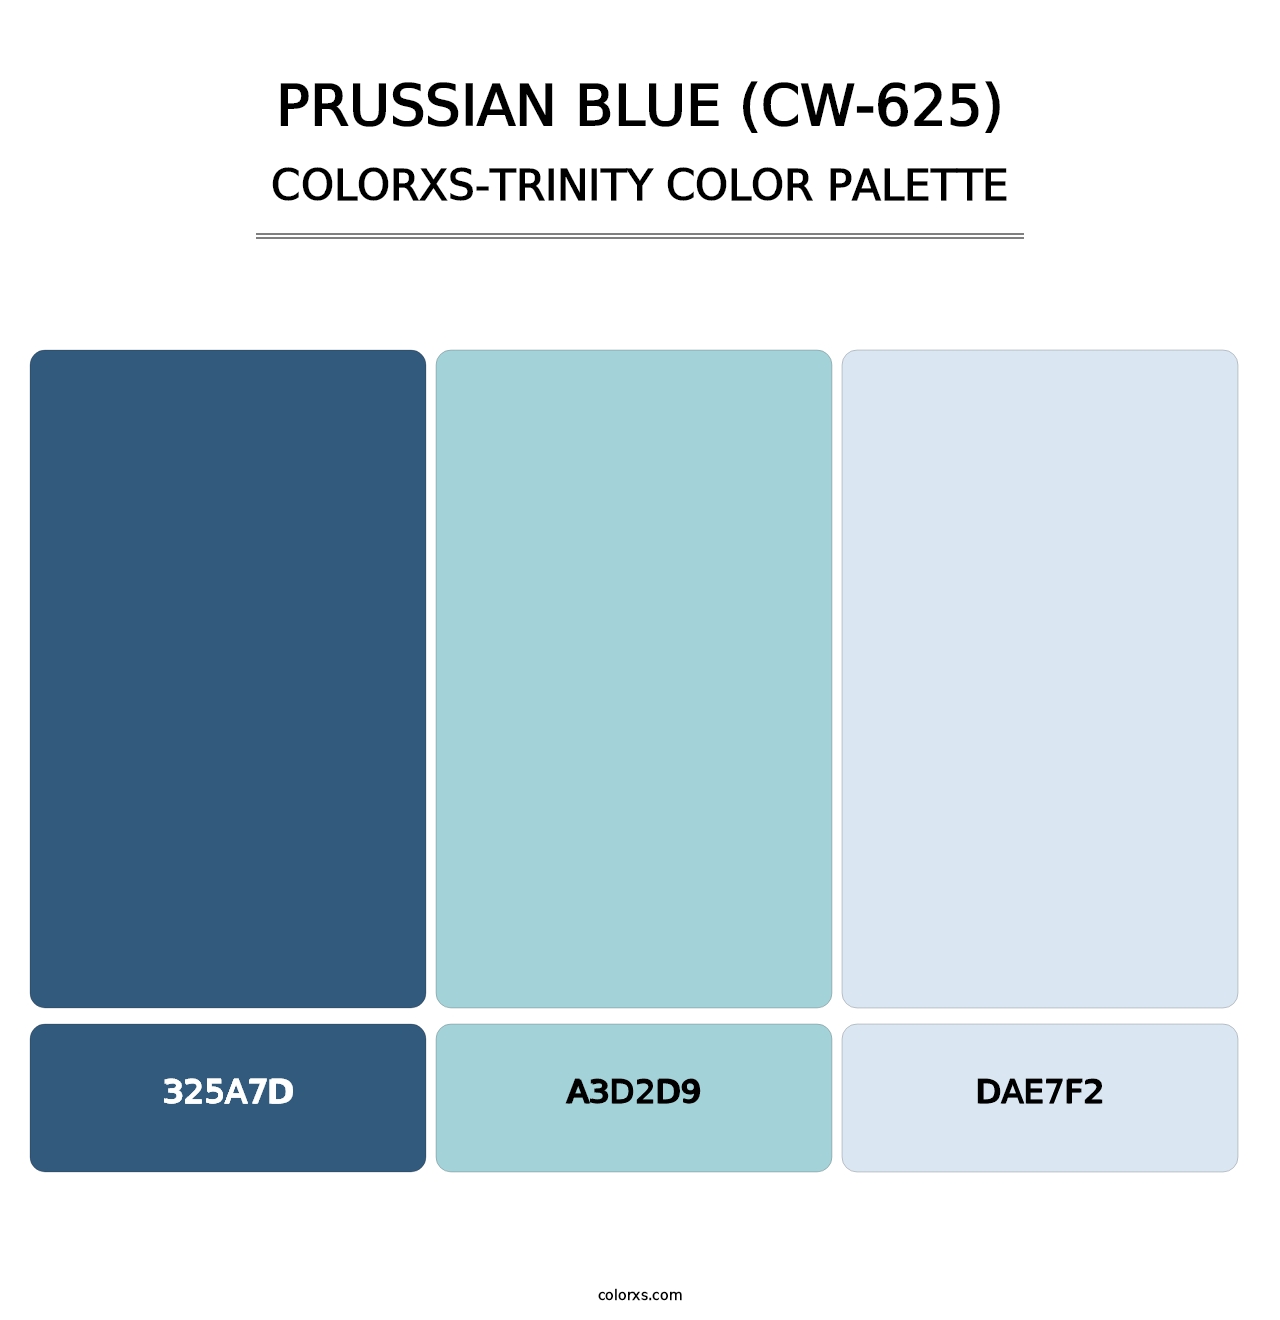 Prussian Blue (CW-625) - Colorxs Trinity Palette